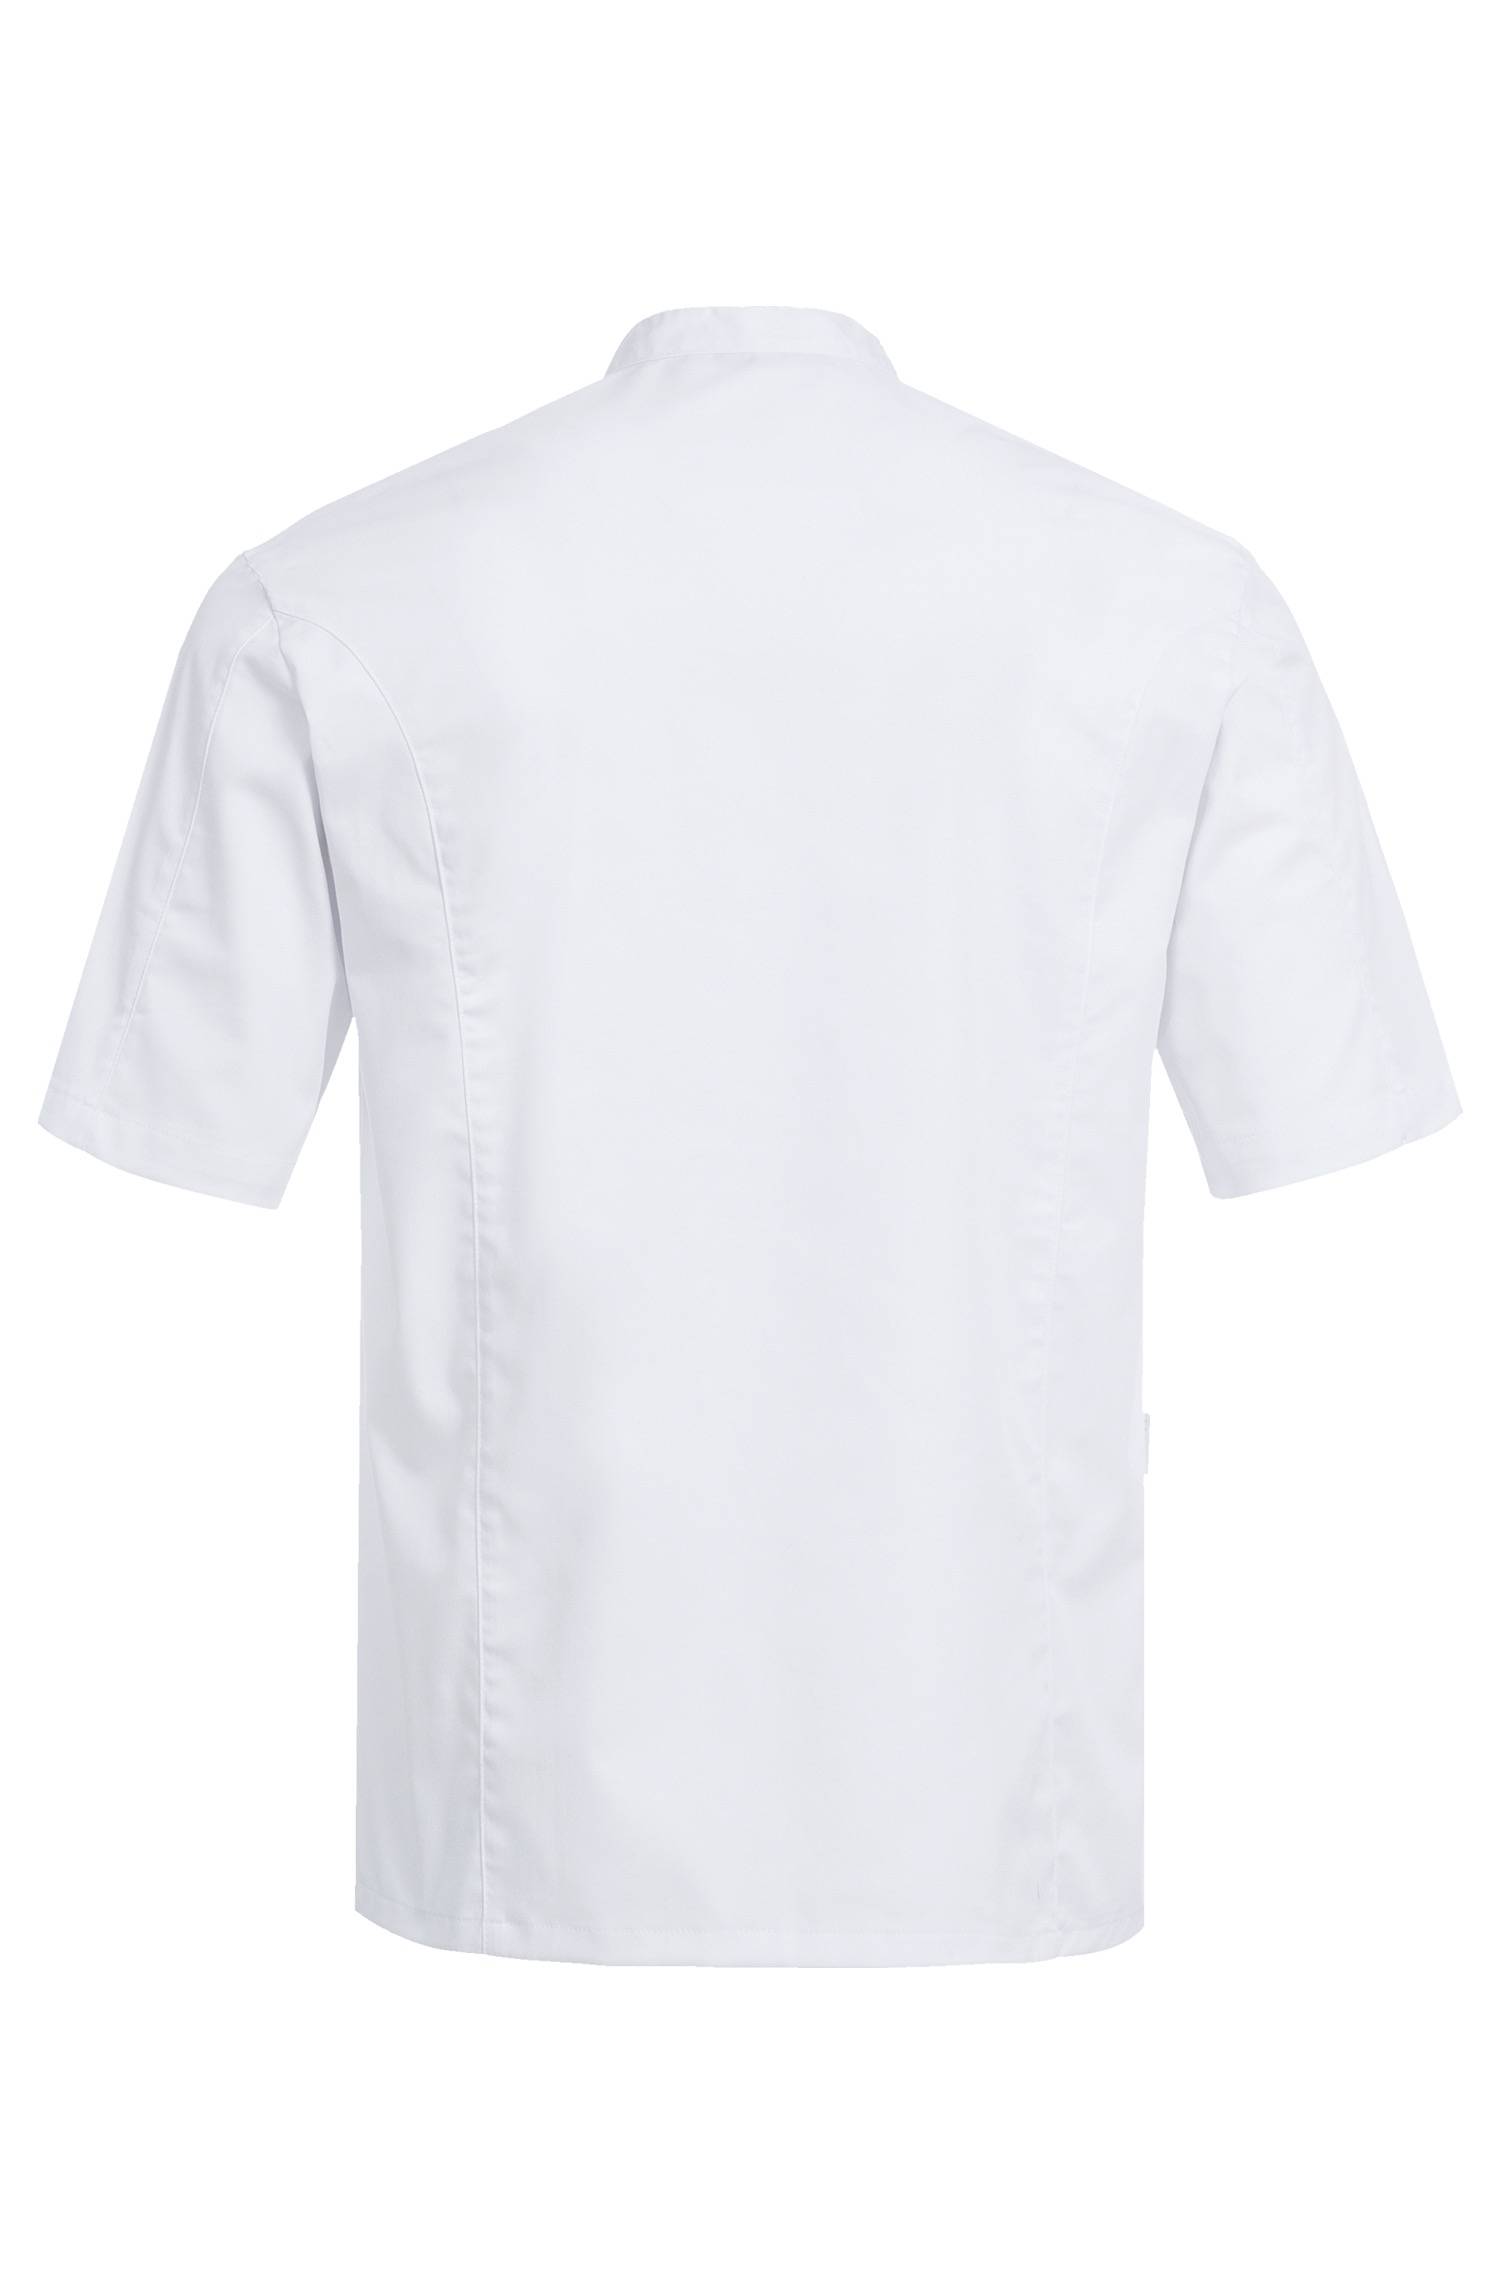 Greiff gastronomic Moda Mens cuisine Premium Chef Jacket Regular Fit White 